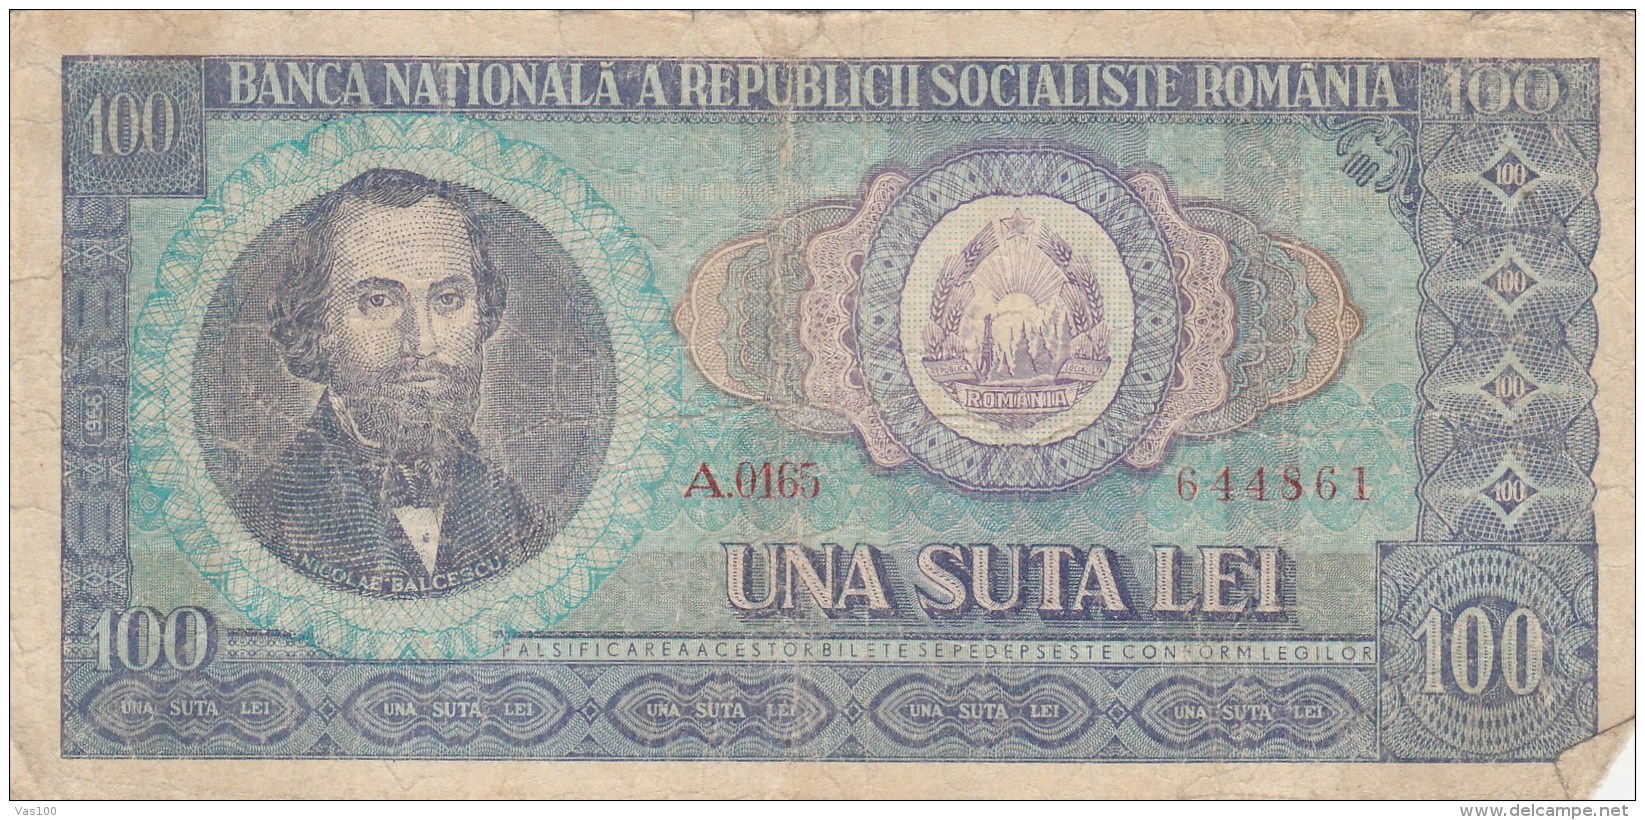 100 LEI, NICOLAE BALCESCU, SOCIALIST REPUBLIC OF ROMANIA,1966,ROMANIA. - Roemenië